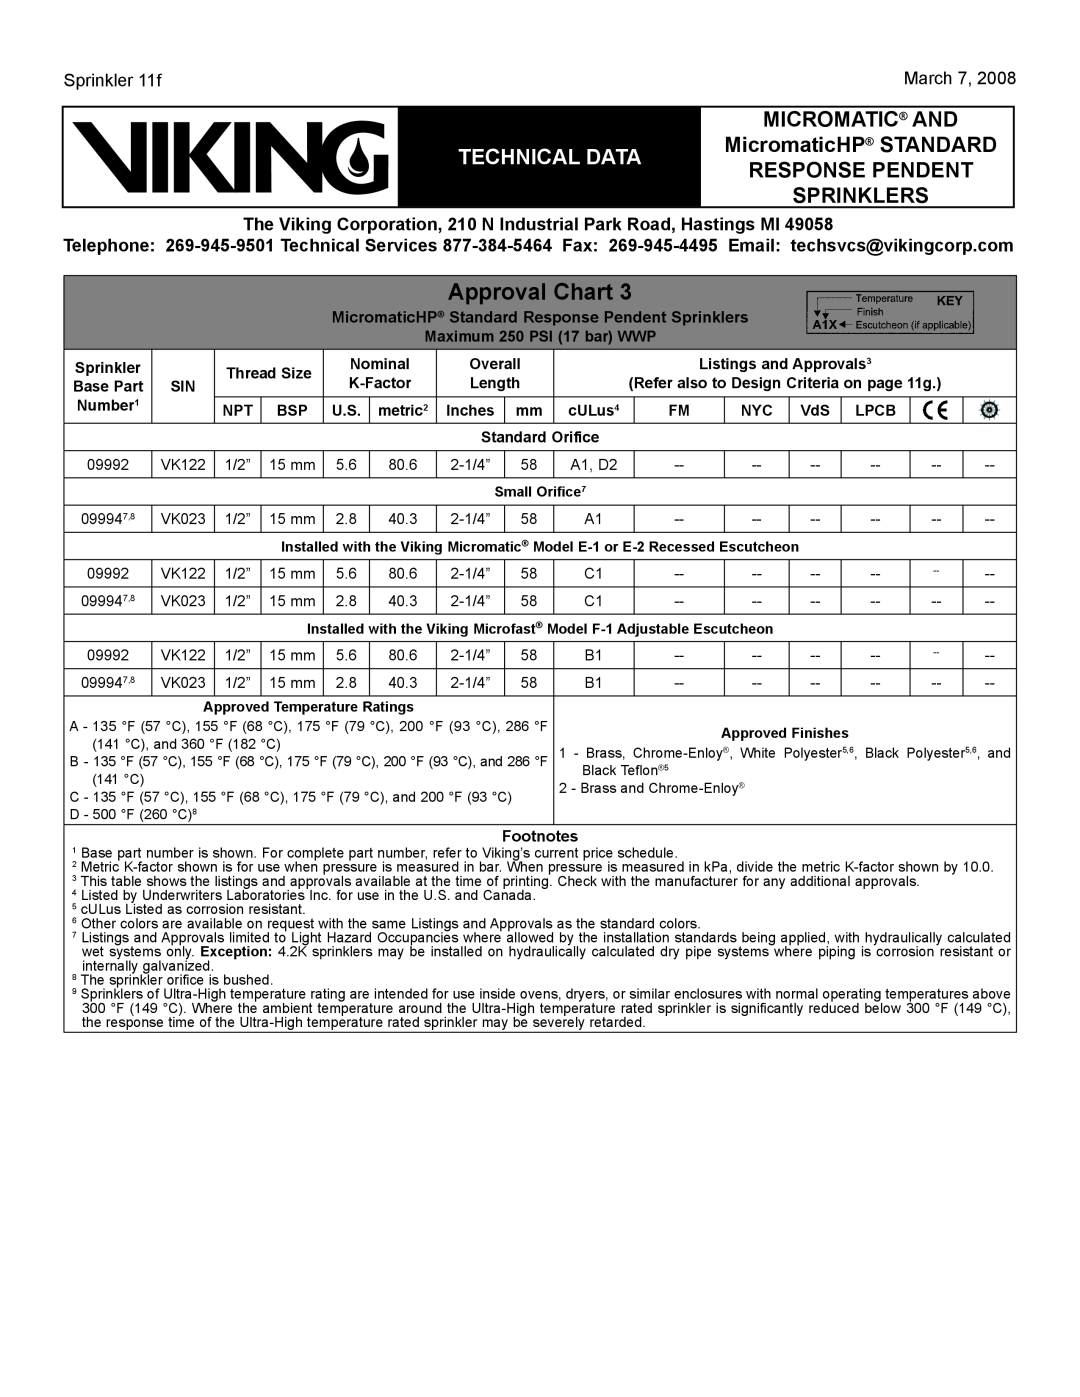 Viking Sprinkler 11a Sprinkler 11f, MicromaticHP Standard Response Pendent Sprinklers, Footnotes, Approval Chart, March 